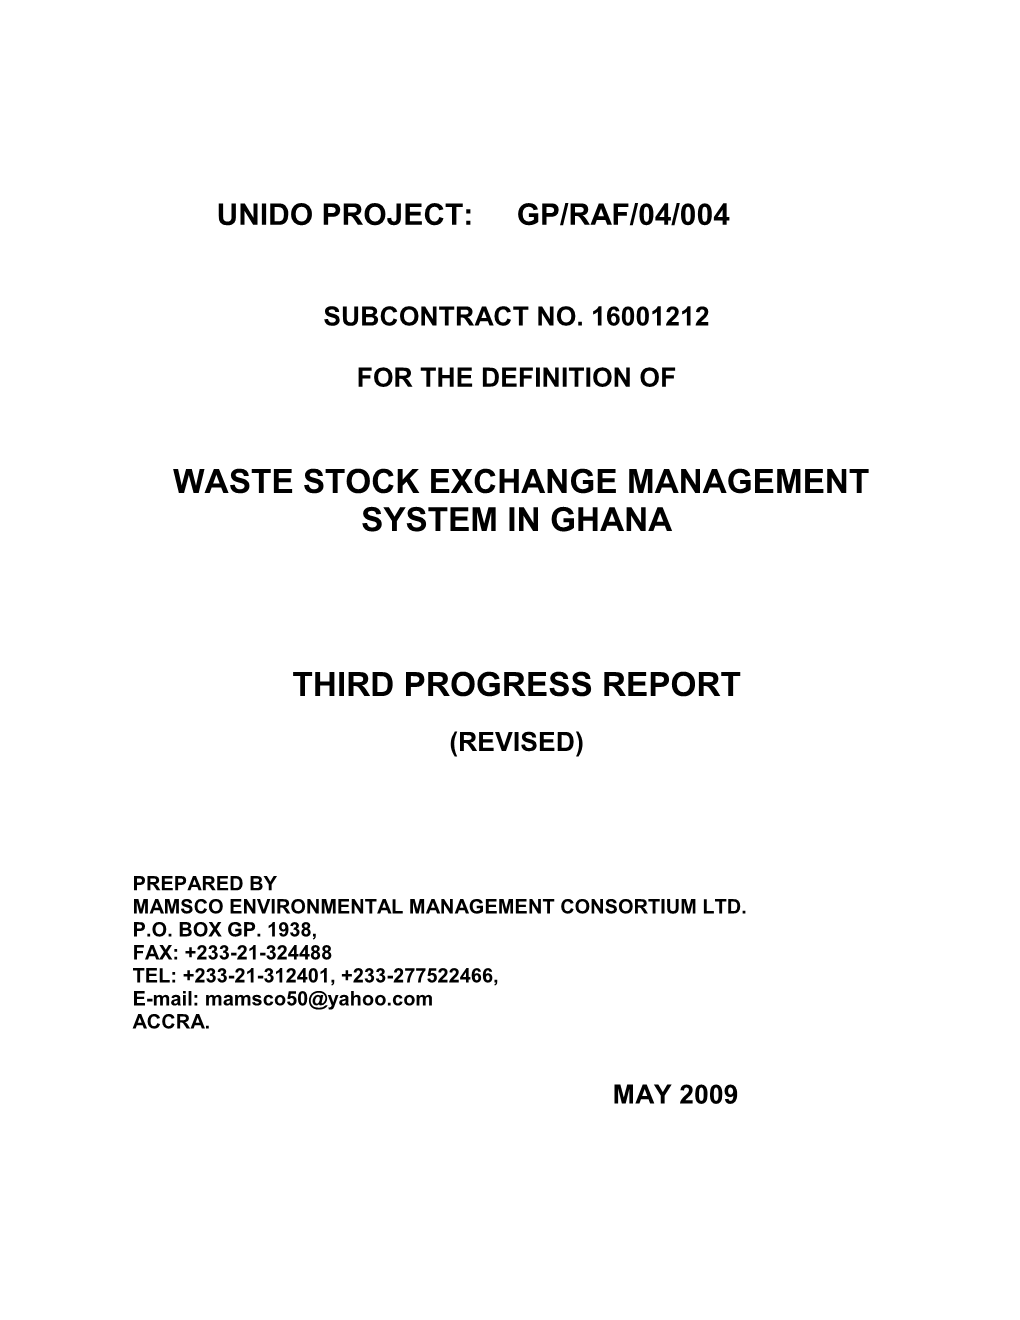 Waste Stock Exchange Management System in Ghana Third Progress Report